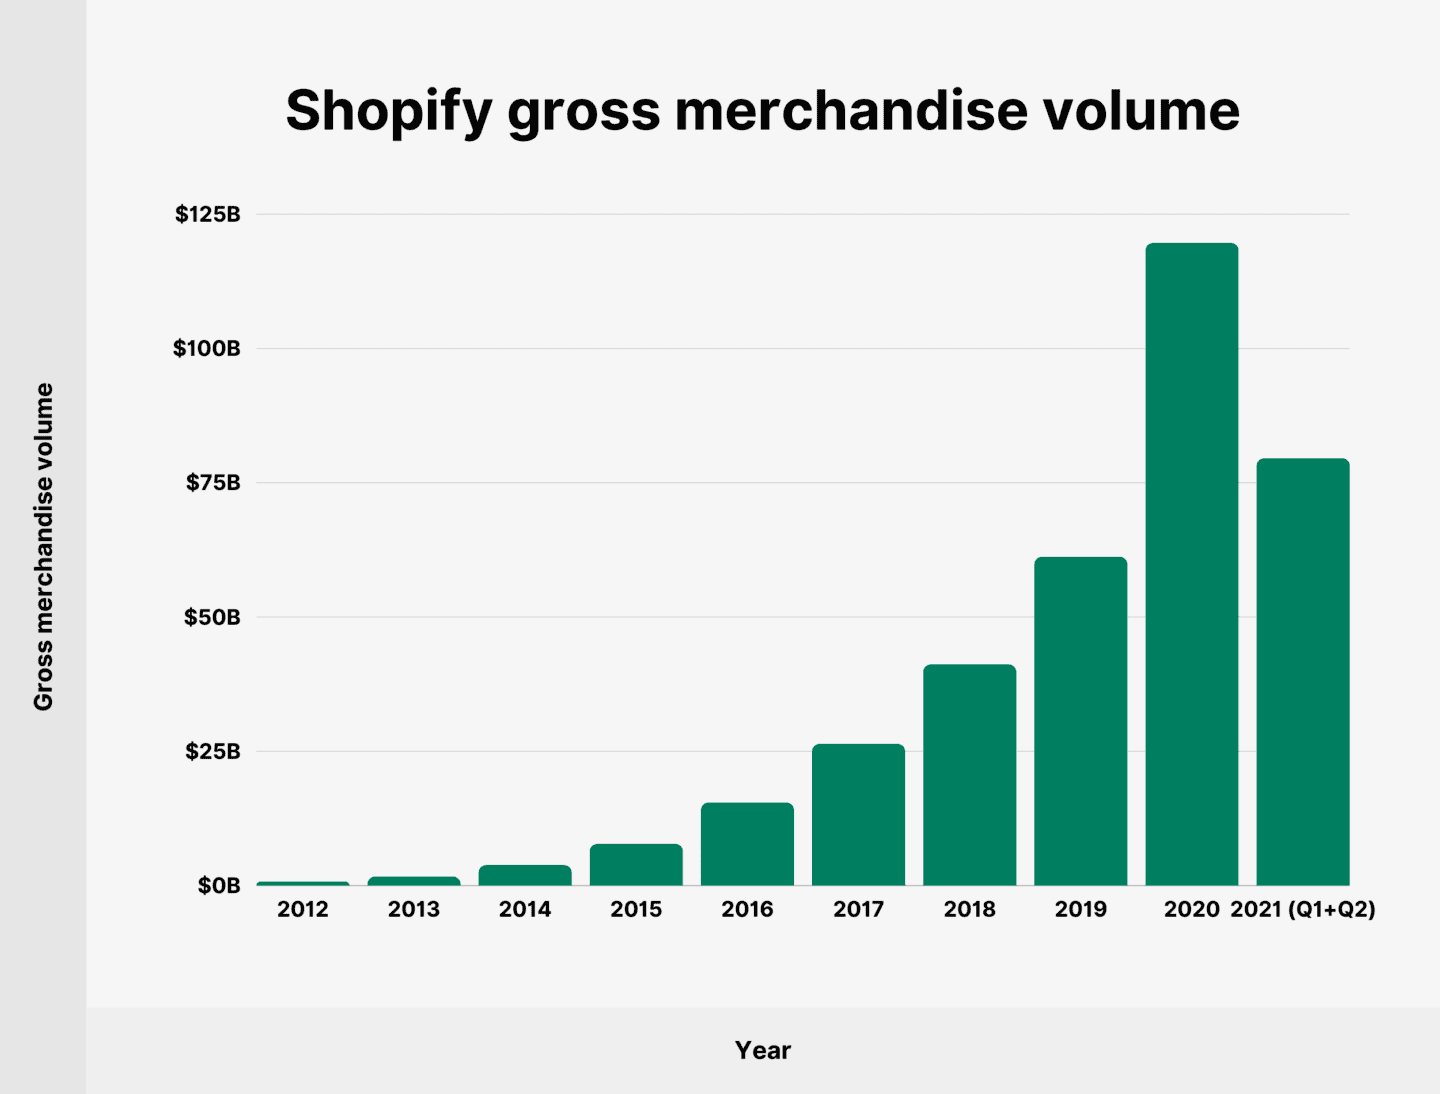 Nilai barang dagangan kotor Shopify pada tahun 2021 adalah 79,5 miliar